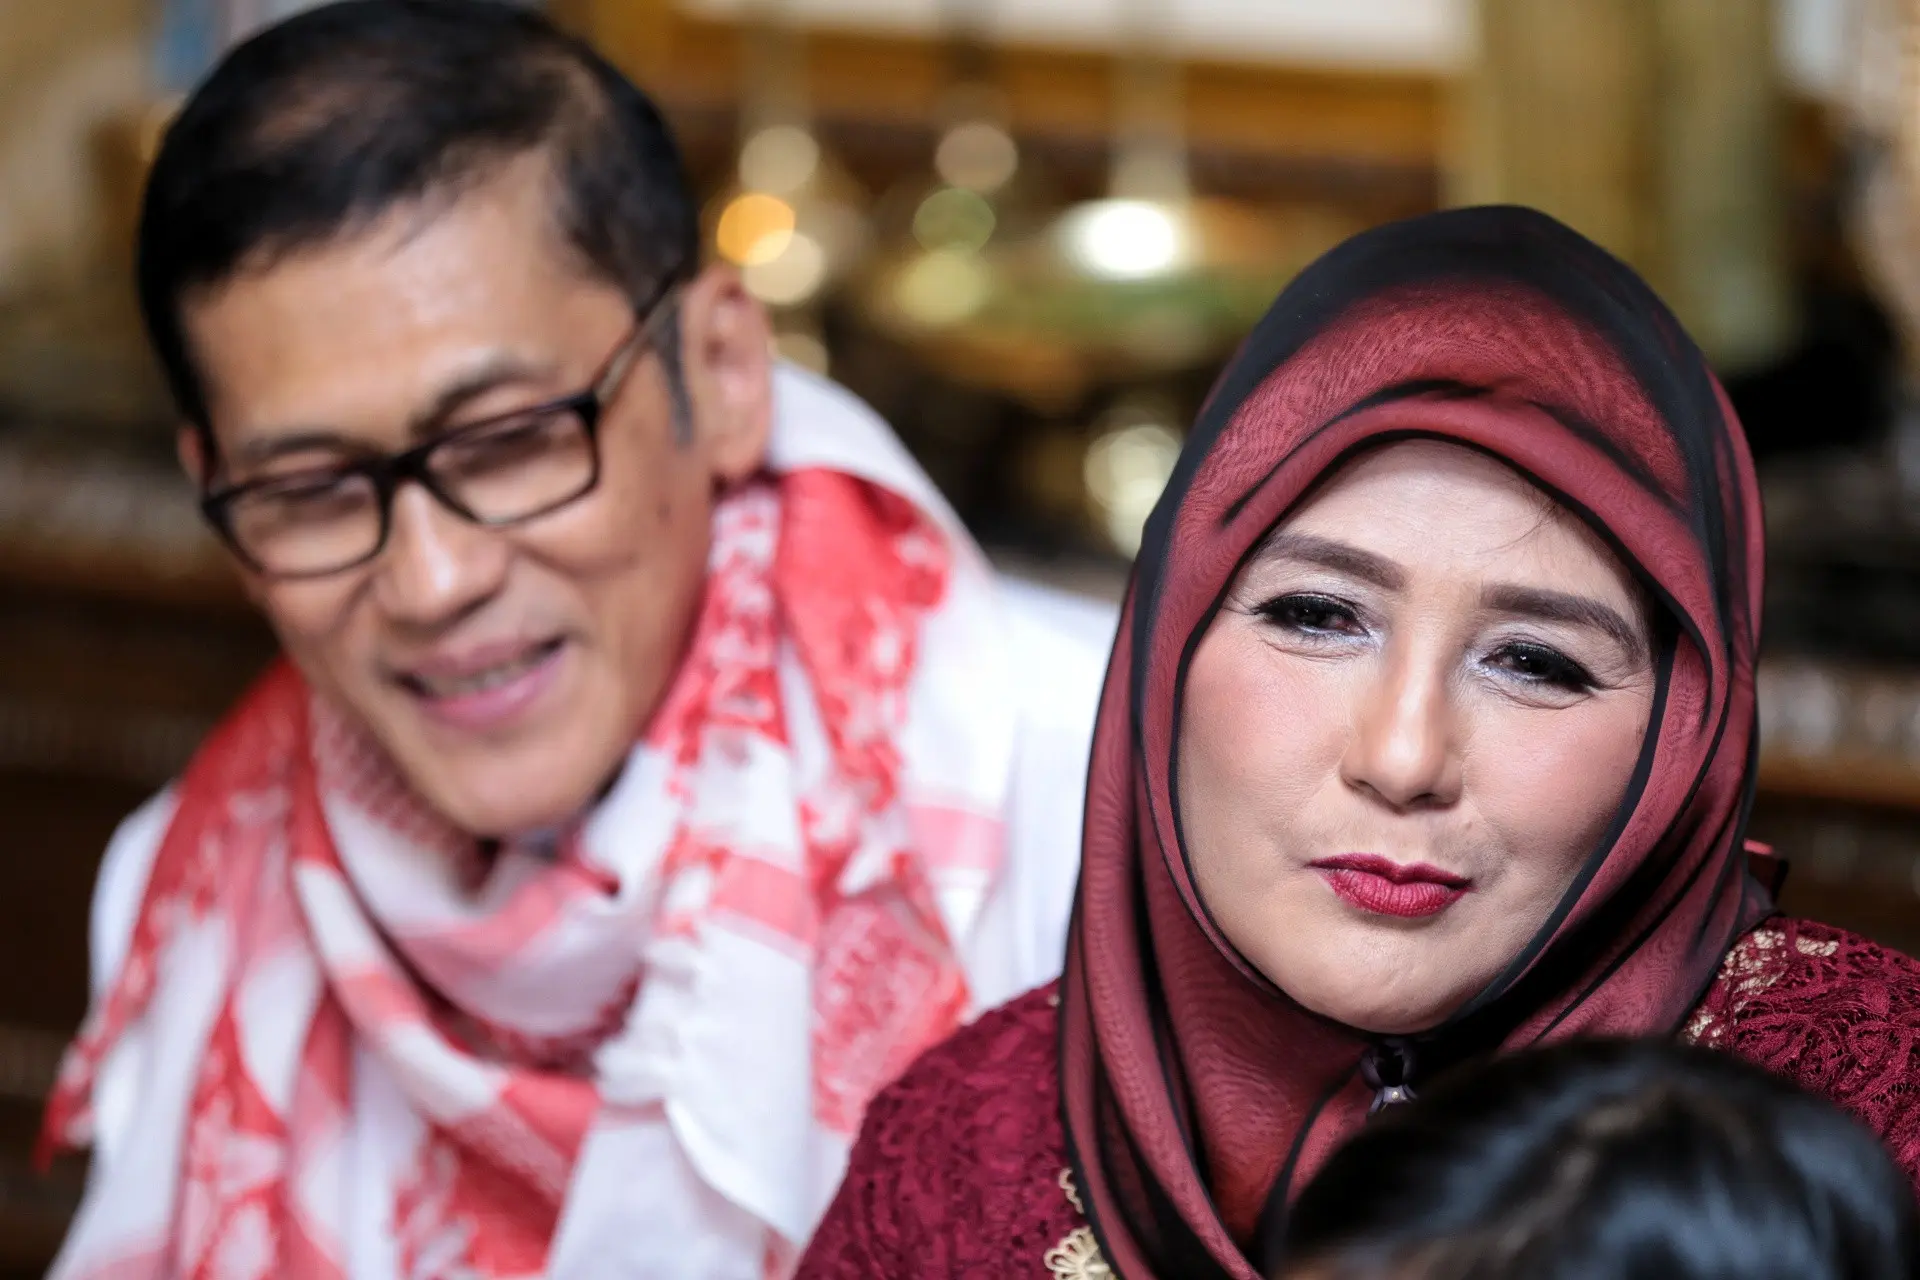 Usia pernikahan artis senior Yatie Octavia dan Pangky Suwito telah mencapai 38 tahun. Pasangan ini merayakan ulang tahun pernikahannya dengan pengajian dan buka bersama di kawasan Pondok Indah, Jakarta Selatan. (Adrian Putra/Bintang.com)